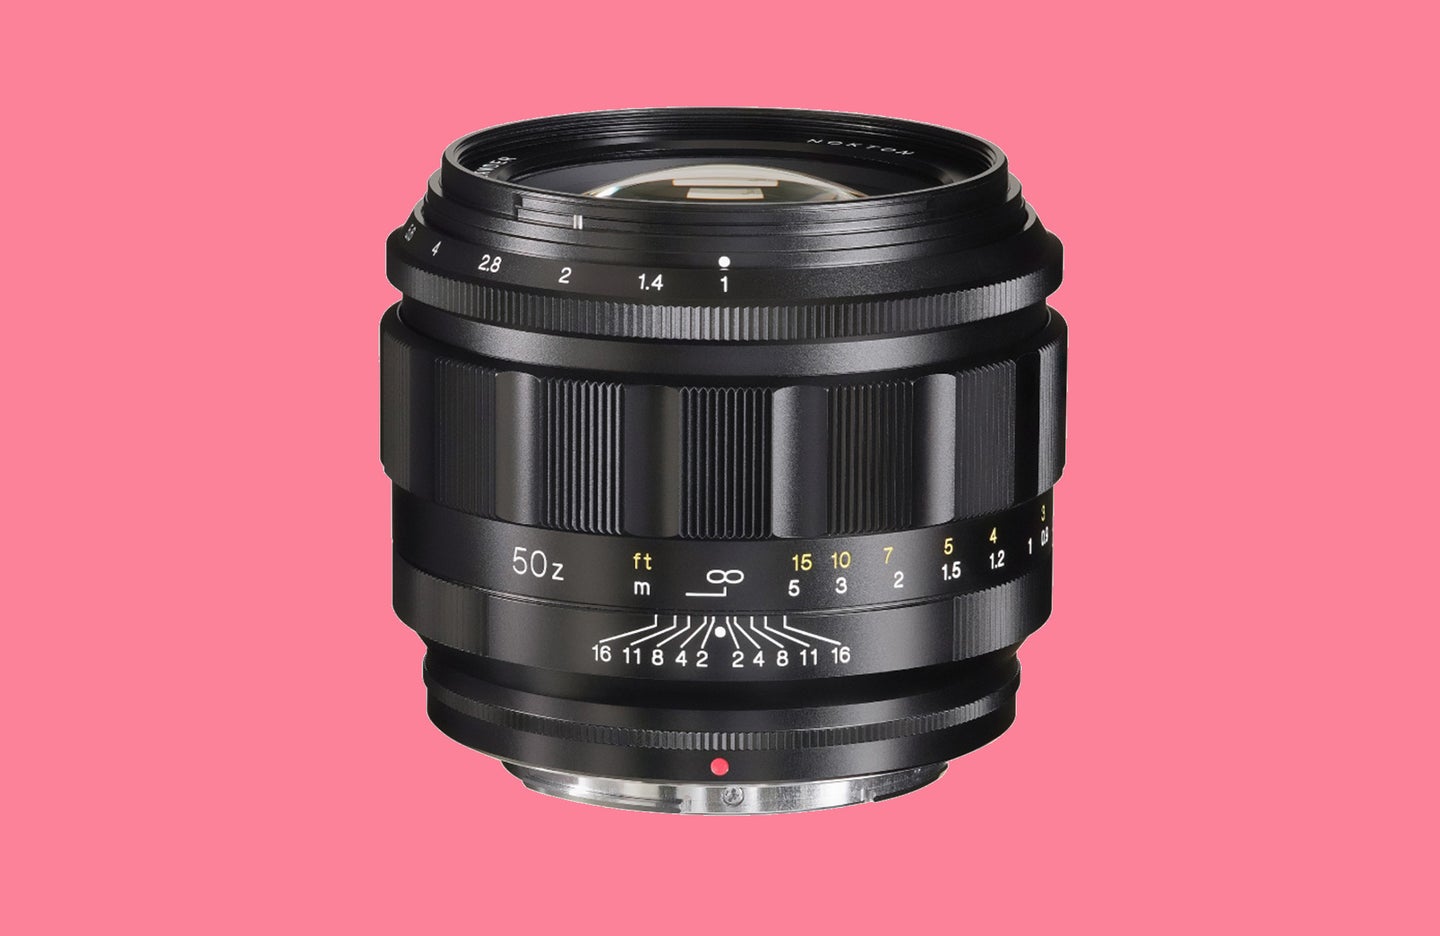 Cosina Voigtlander 50mm f/1 Aspherical lens for Nikon